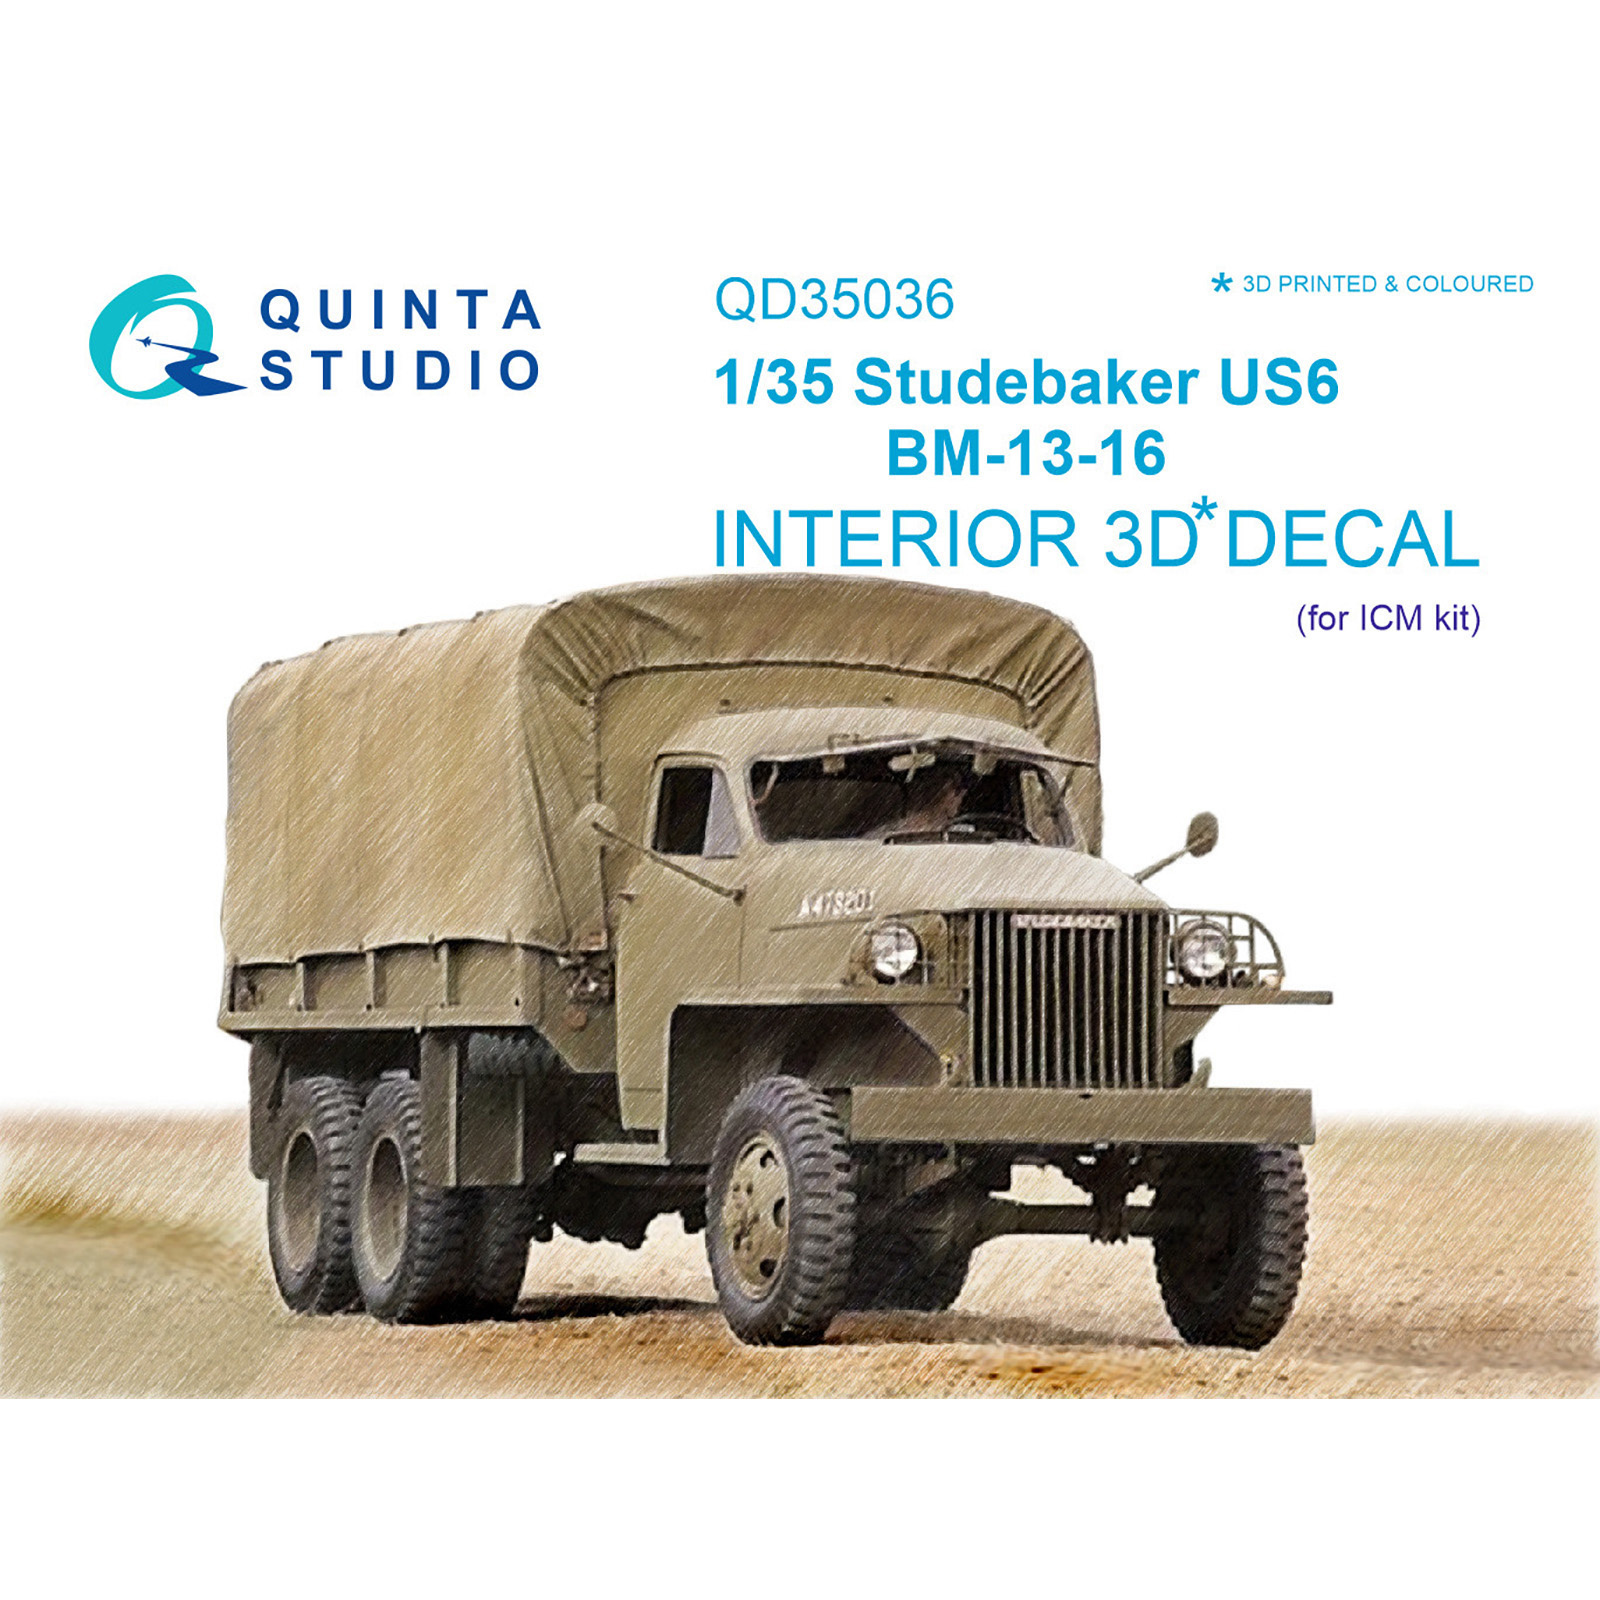 QD35036 Quinta Studio 1/35 3D Studebaker US6 Cabin Interior Decal (for ICM model)